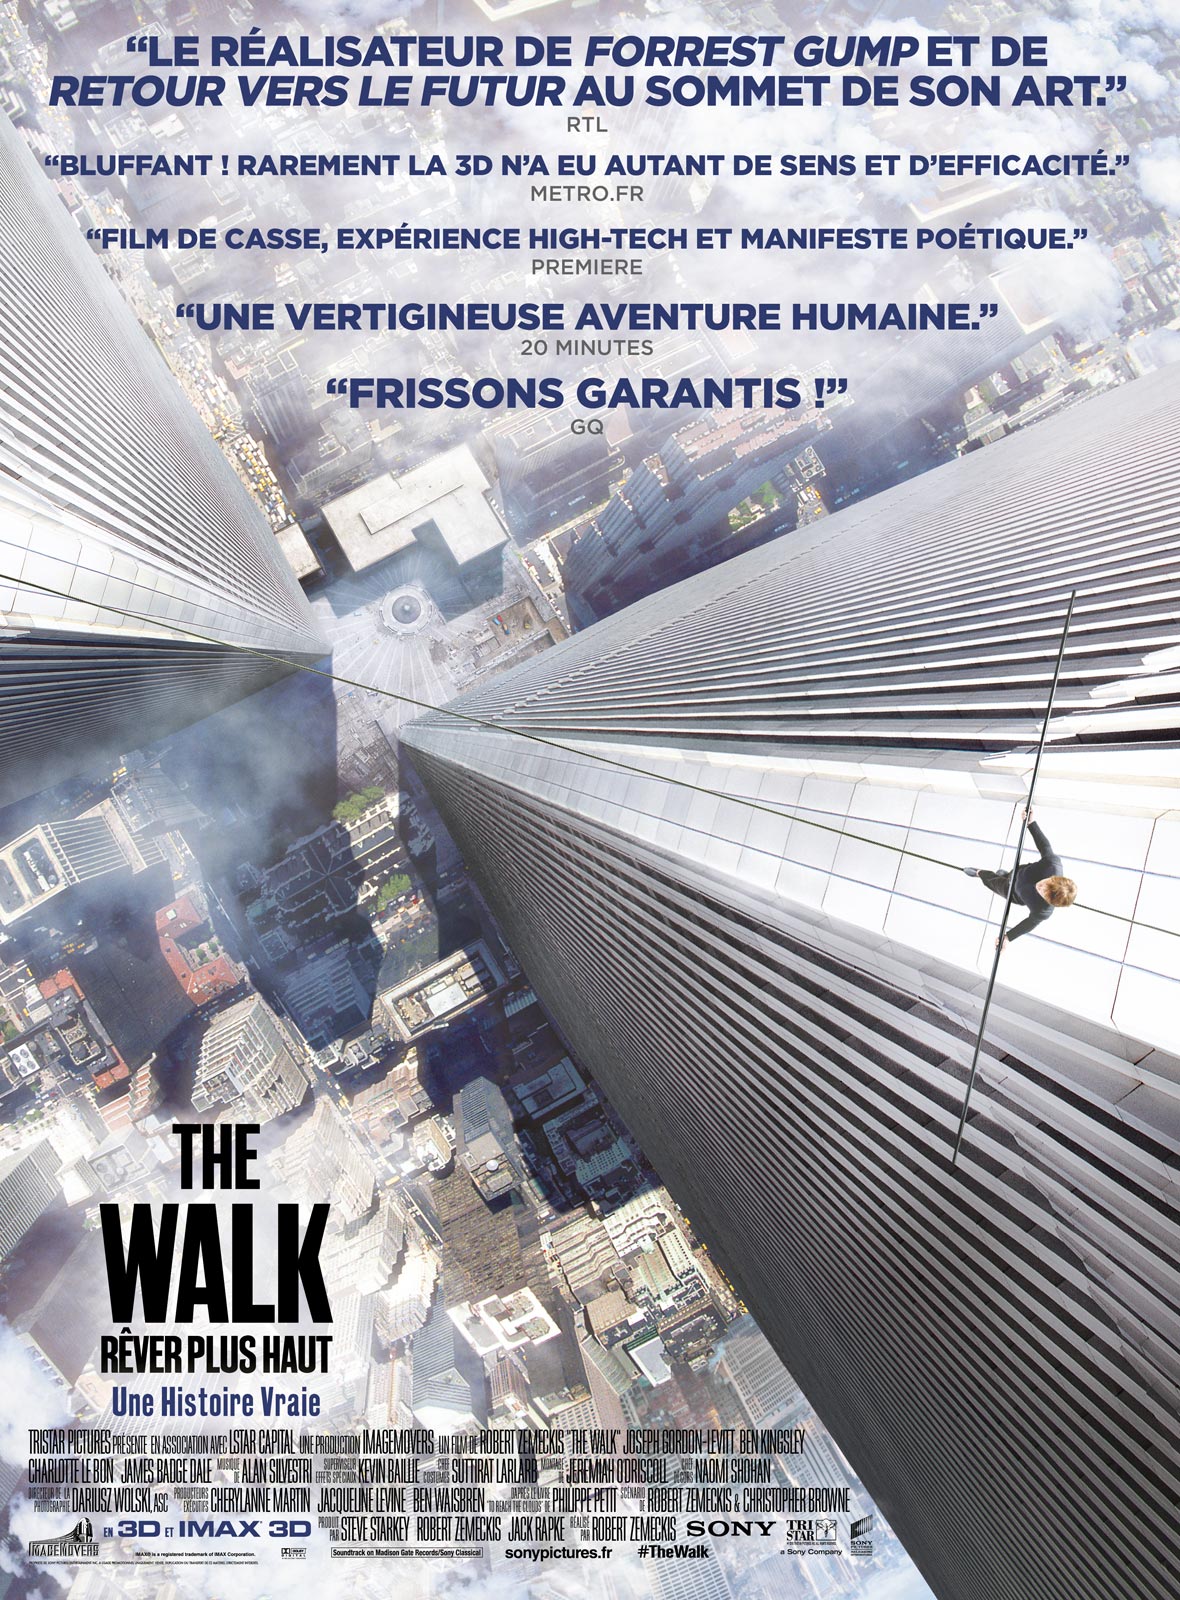 The Walk – Rêver Plus Haut streaming vf gratuit